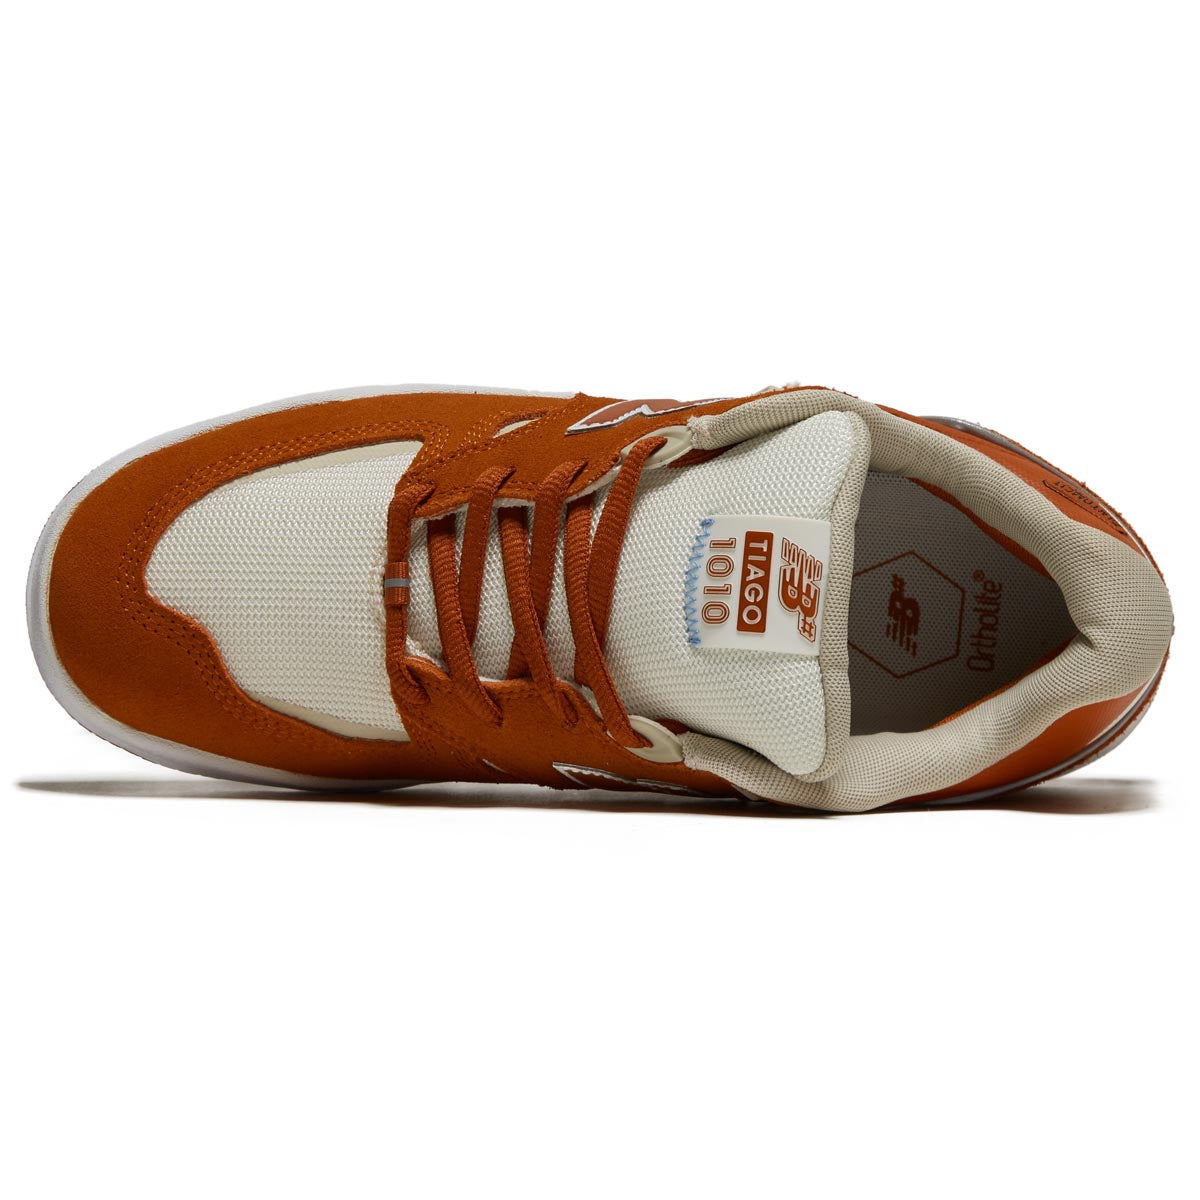 New Balance 1010 Tiago Shoes - Rust Oxide image 3